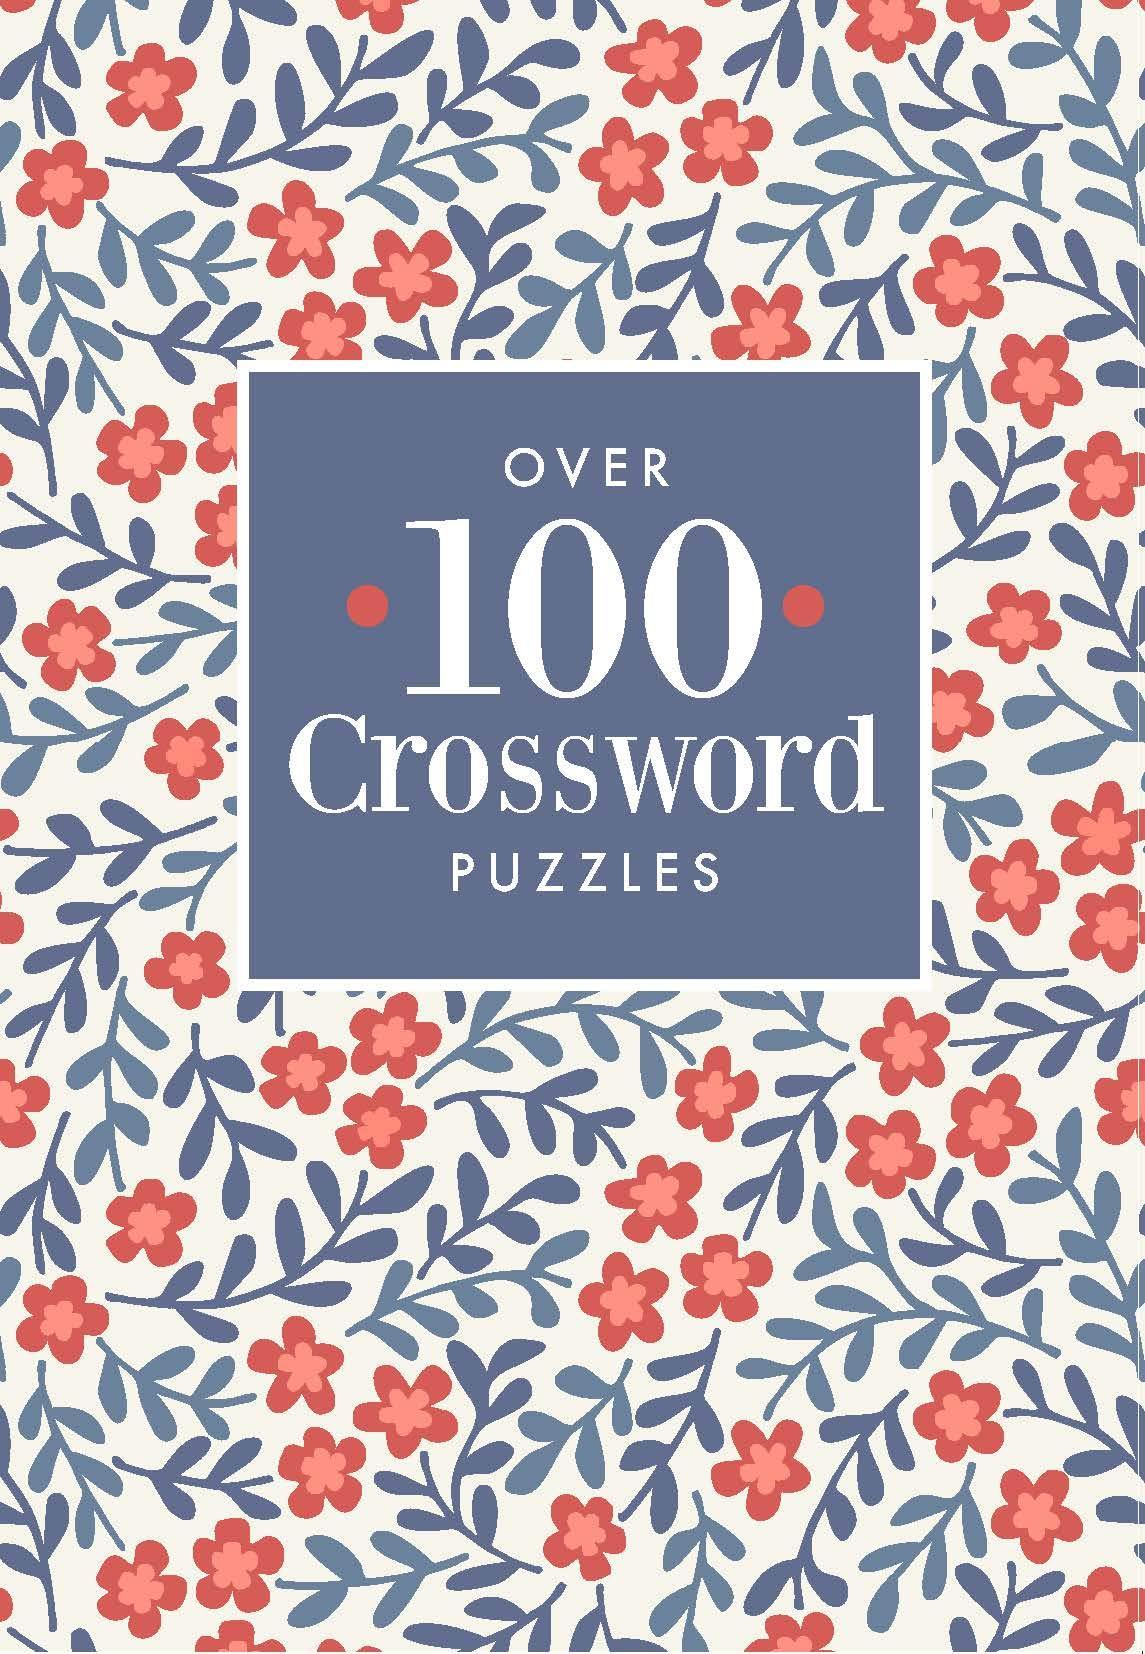 Over 100 Crossword Puzzles (Puzzle Books)